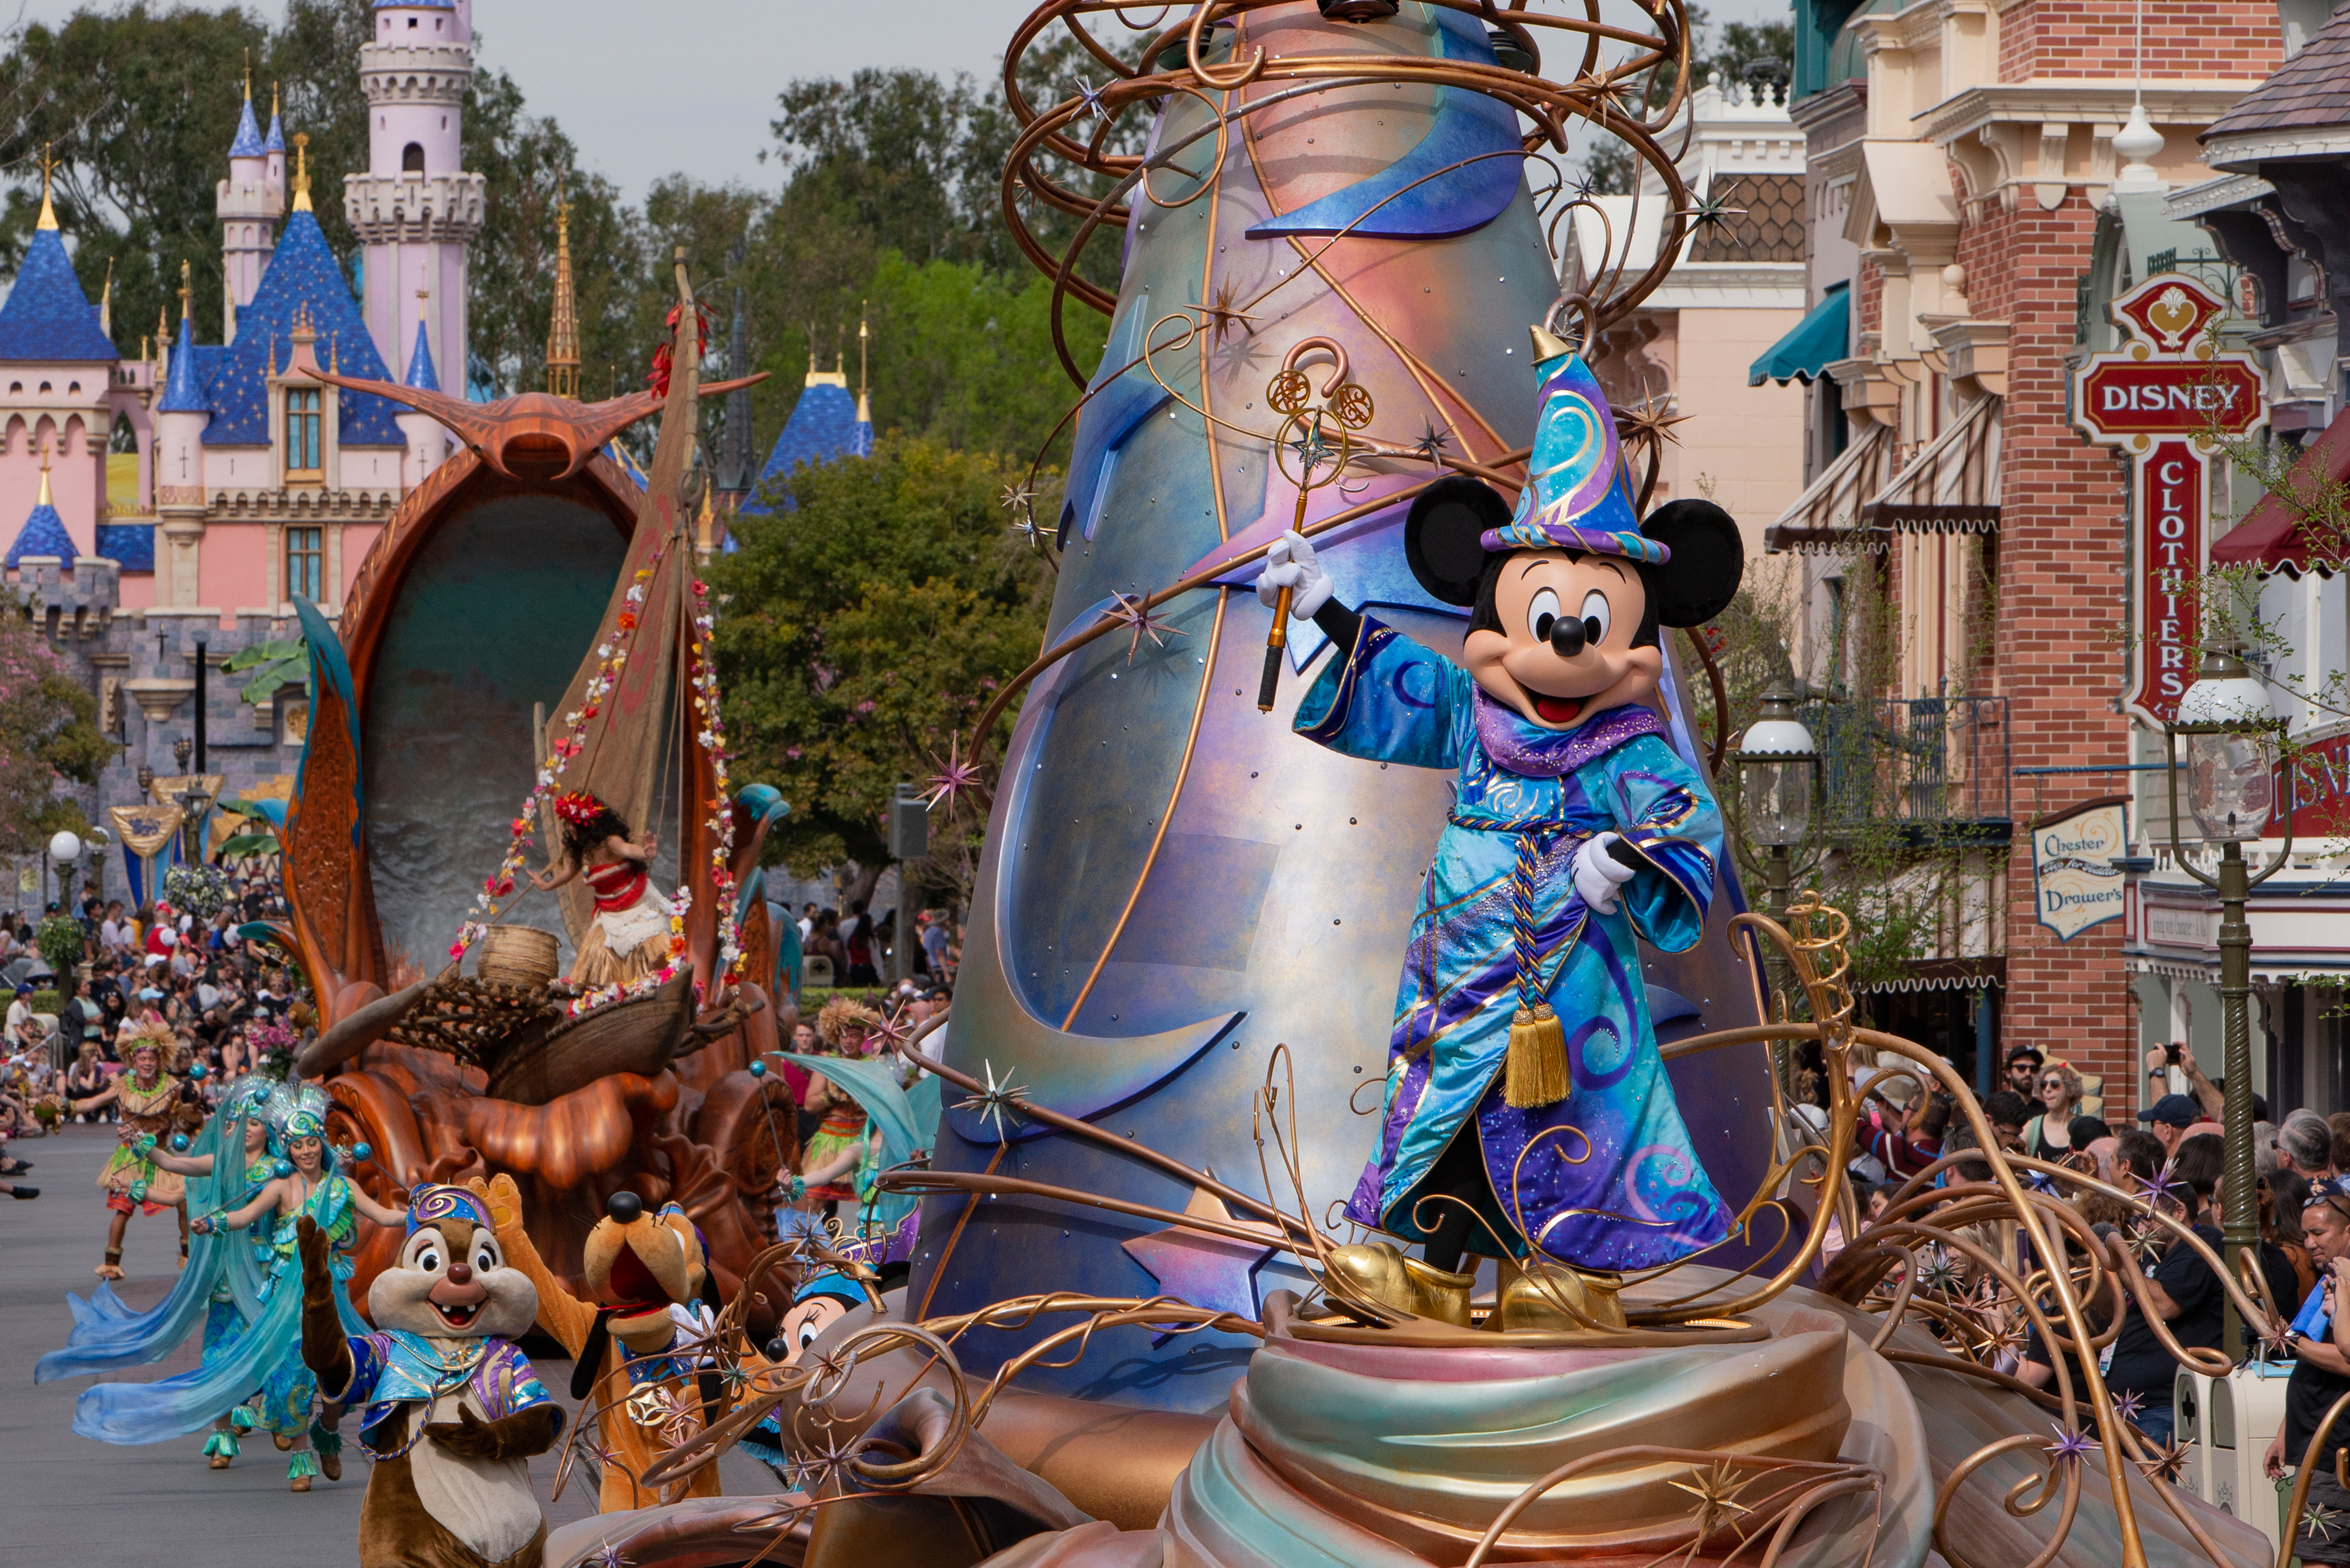 Magic Happens Returning to Disneyland Resort in February 2023